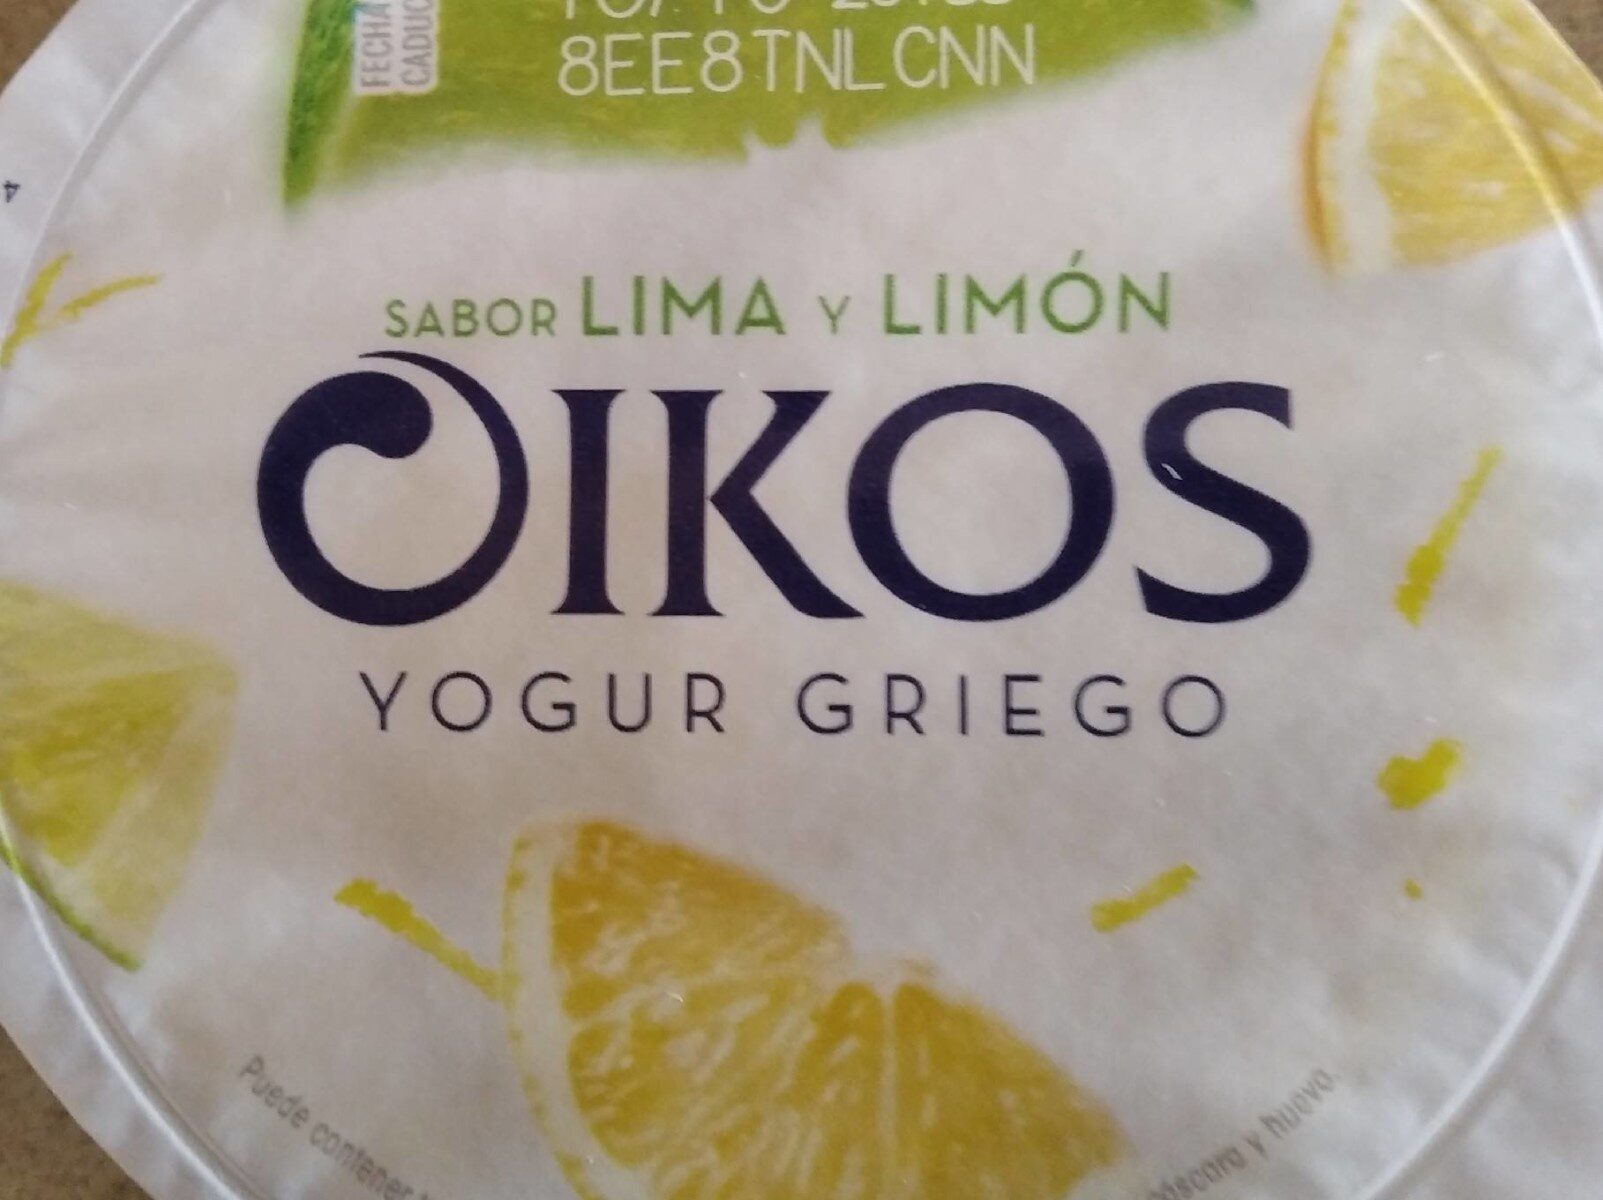 Yogur griego Lima y limón - Produit - es